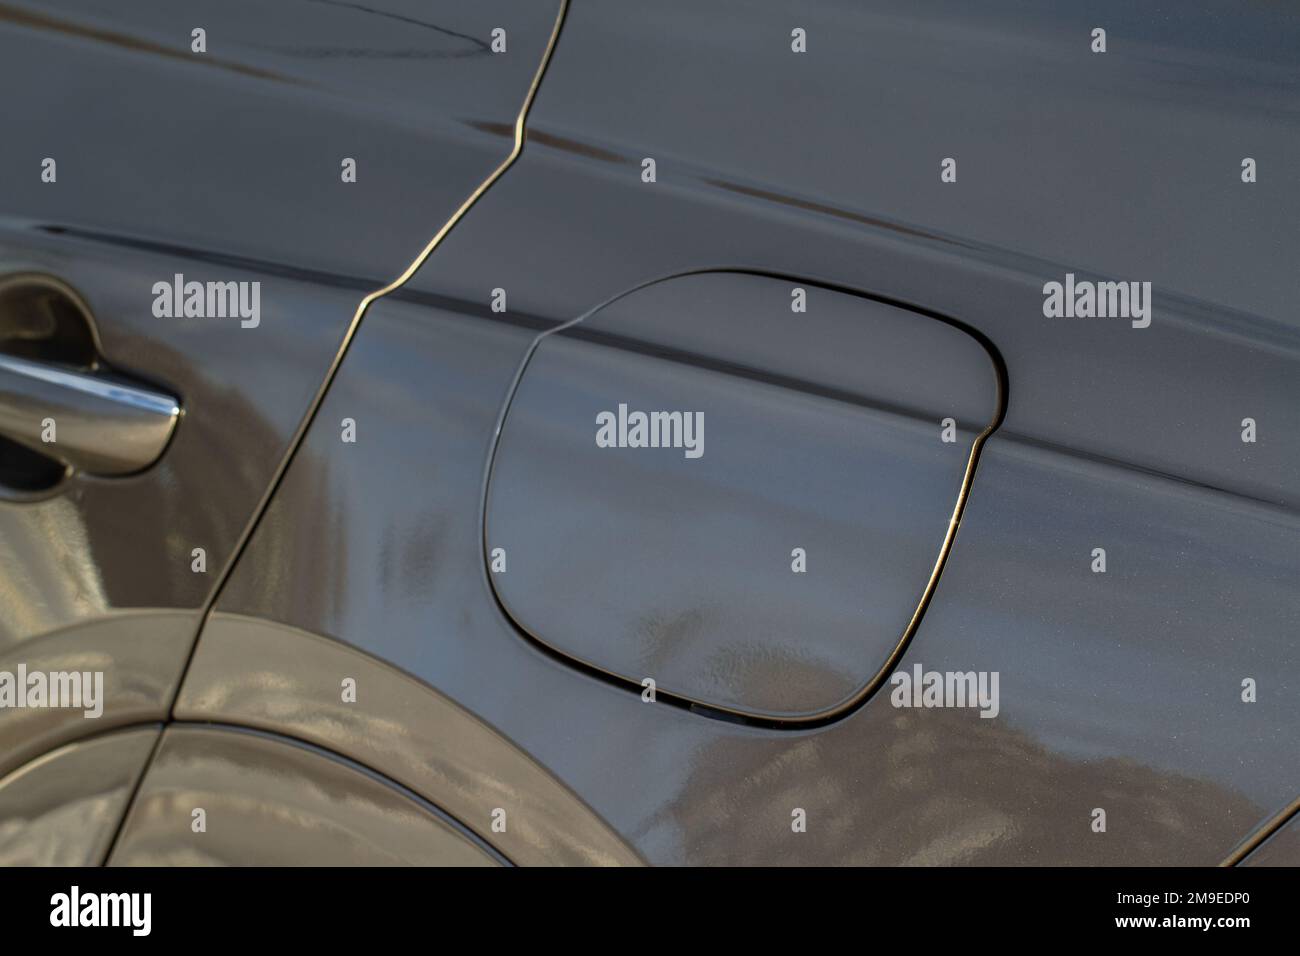 Fuel tank cap -Fotos und -Bildmaterial in hoher Auflösung – Alamy